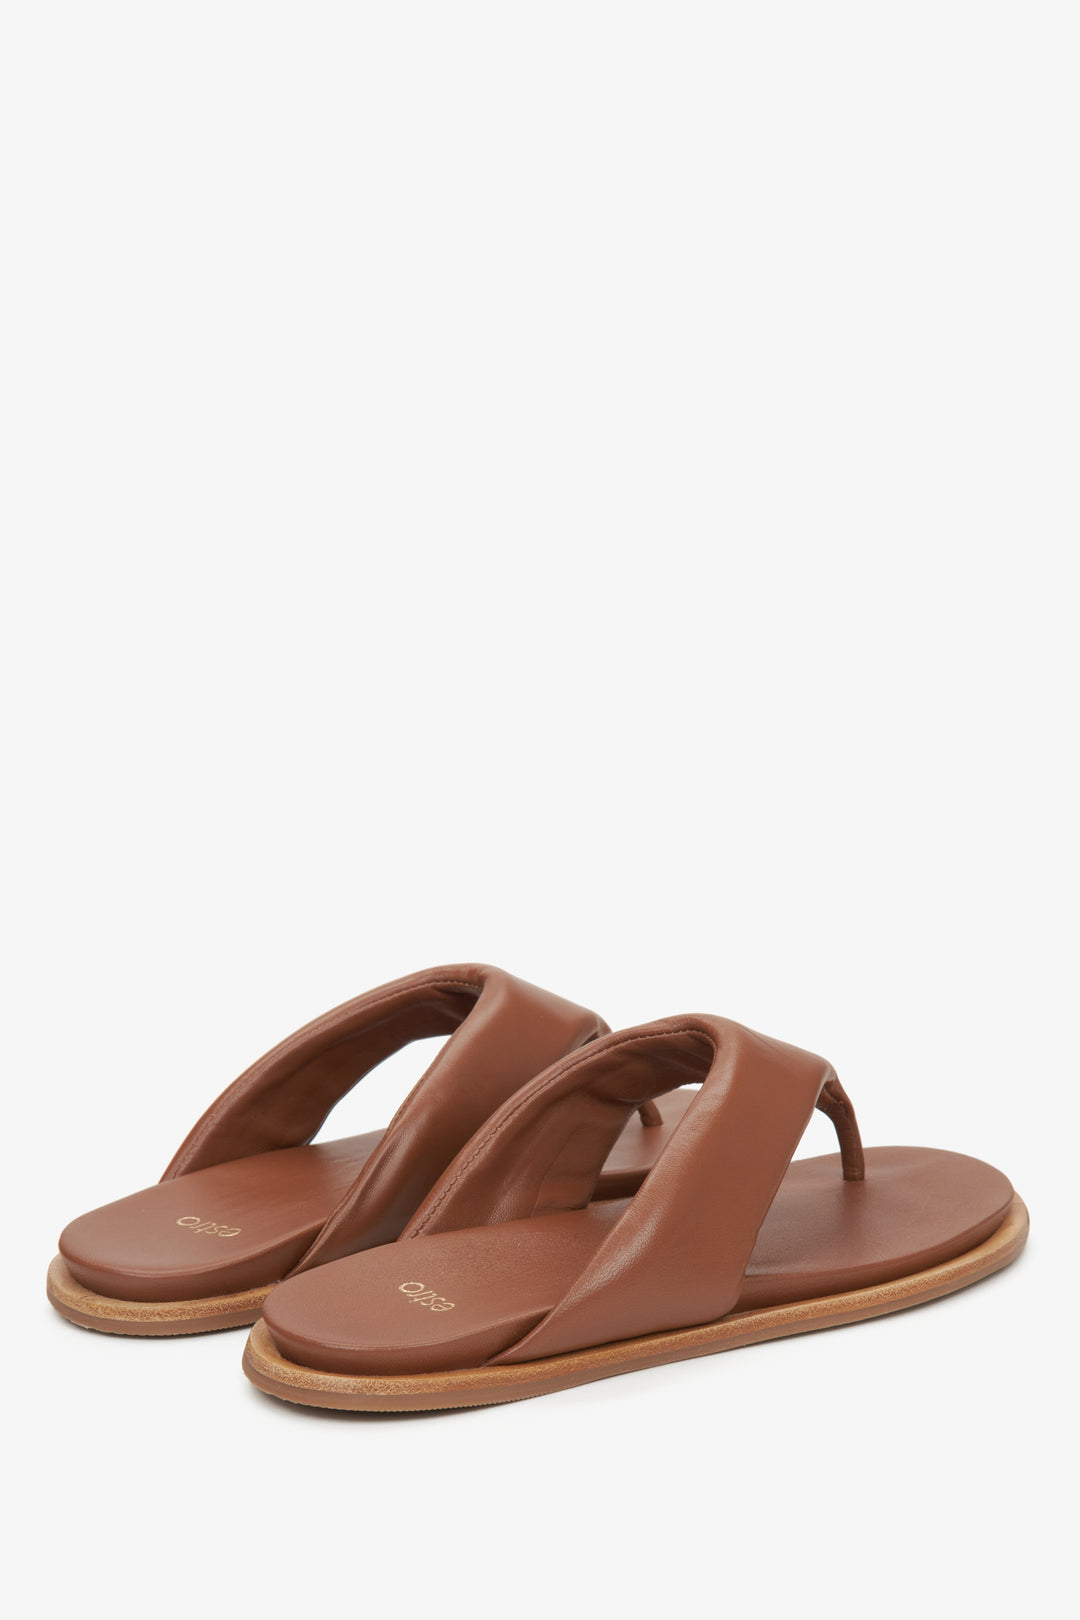 Women's brown leather slide sandals Estro.